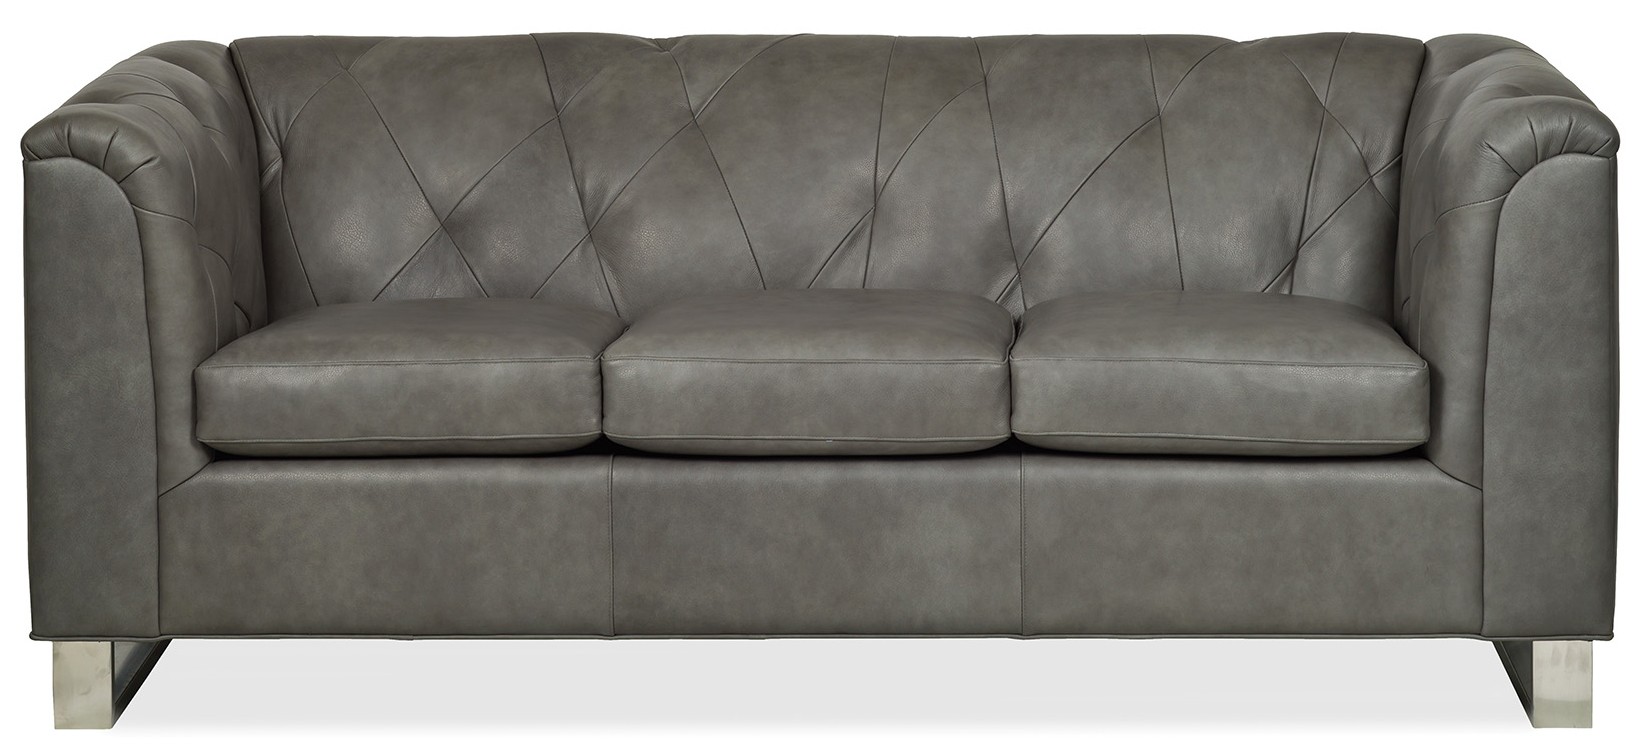 dove grey leather sofa